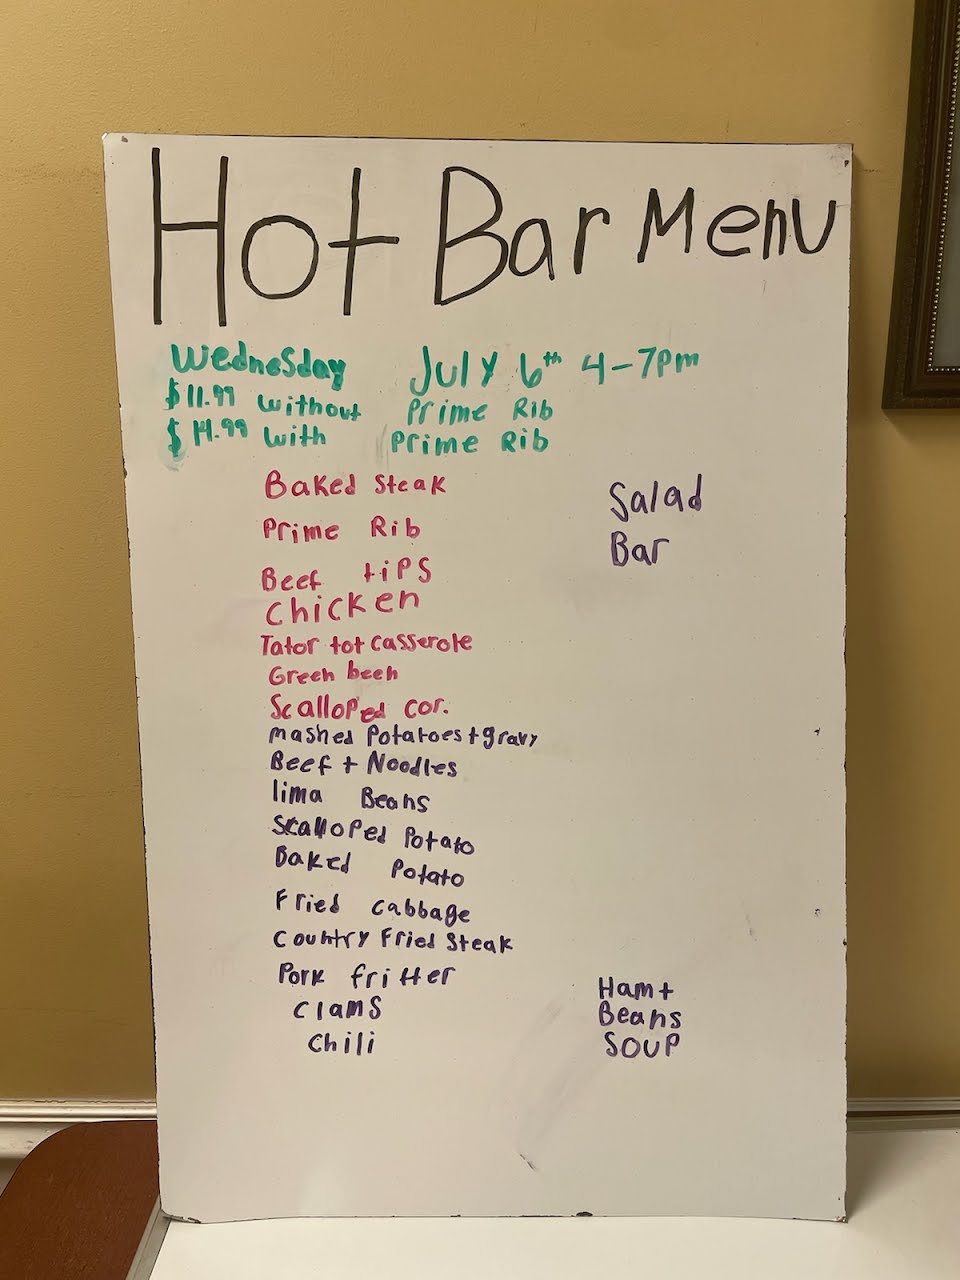 Wednesday Hot Bar Menu